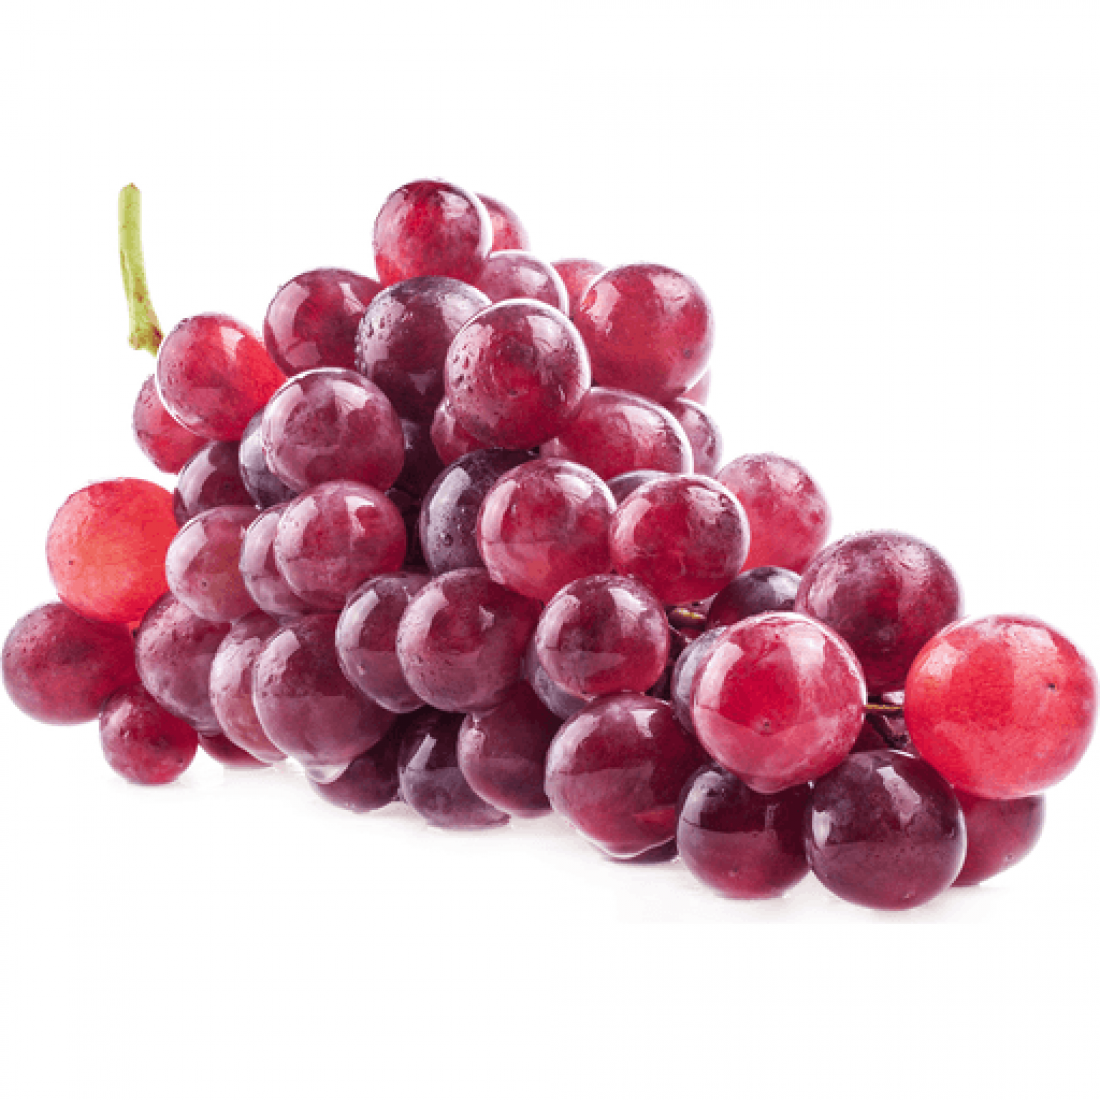 USA/AUS Red Seedless Grapes